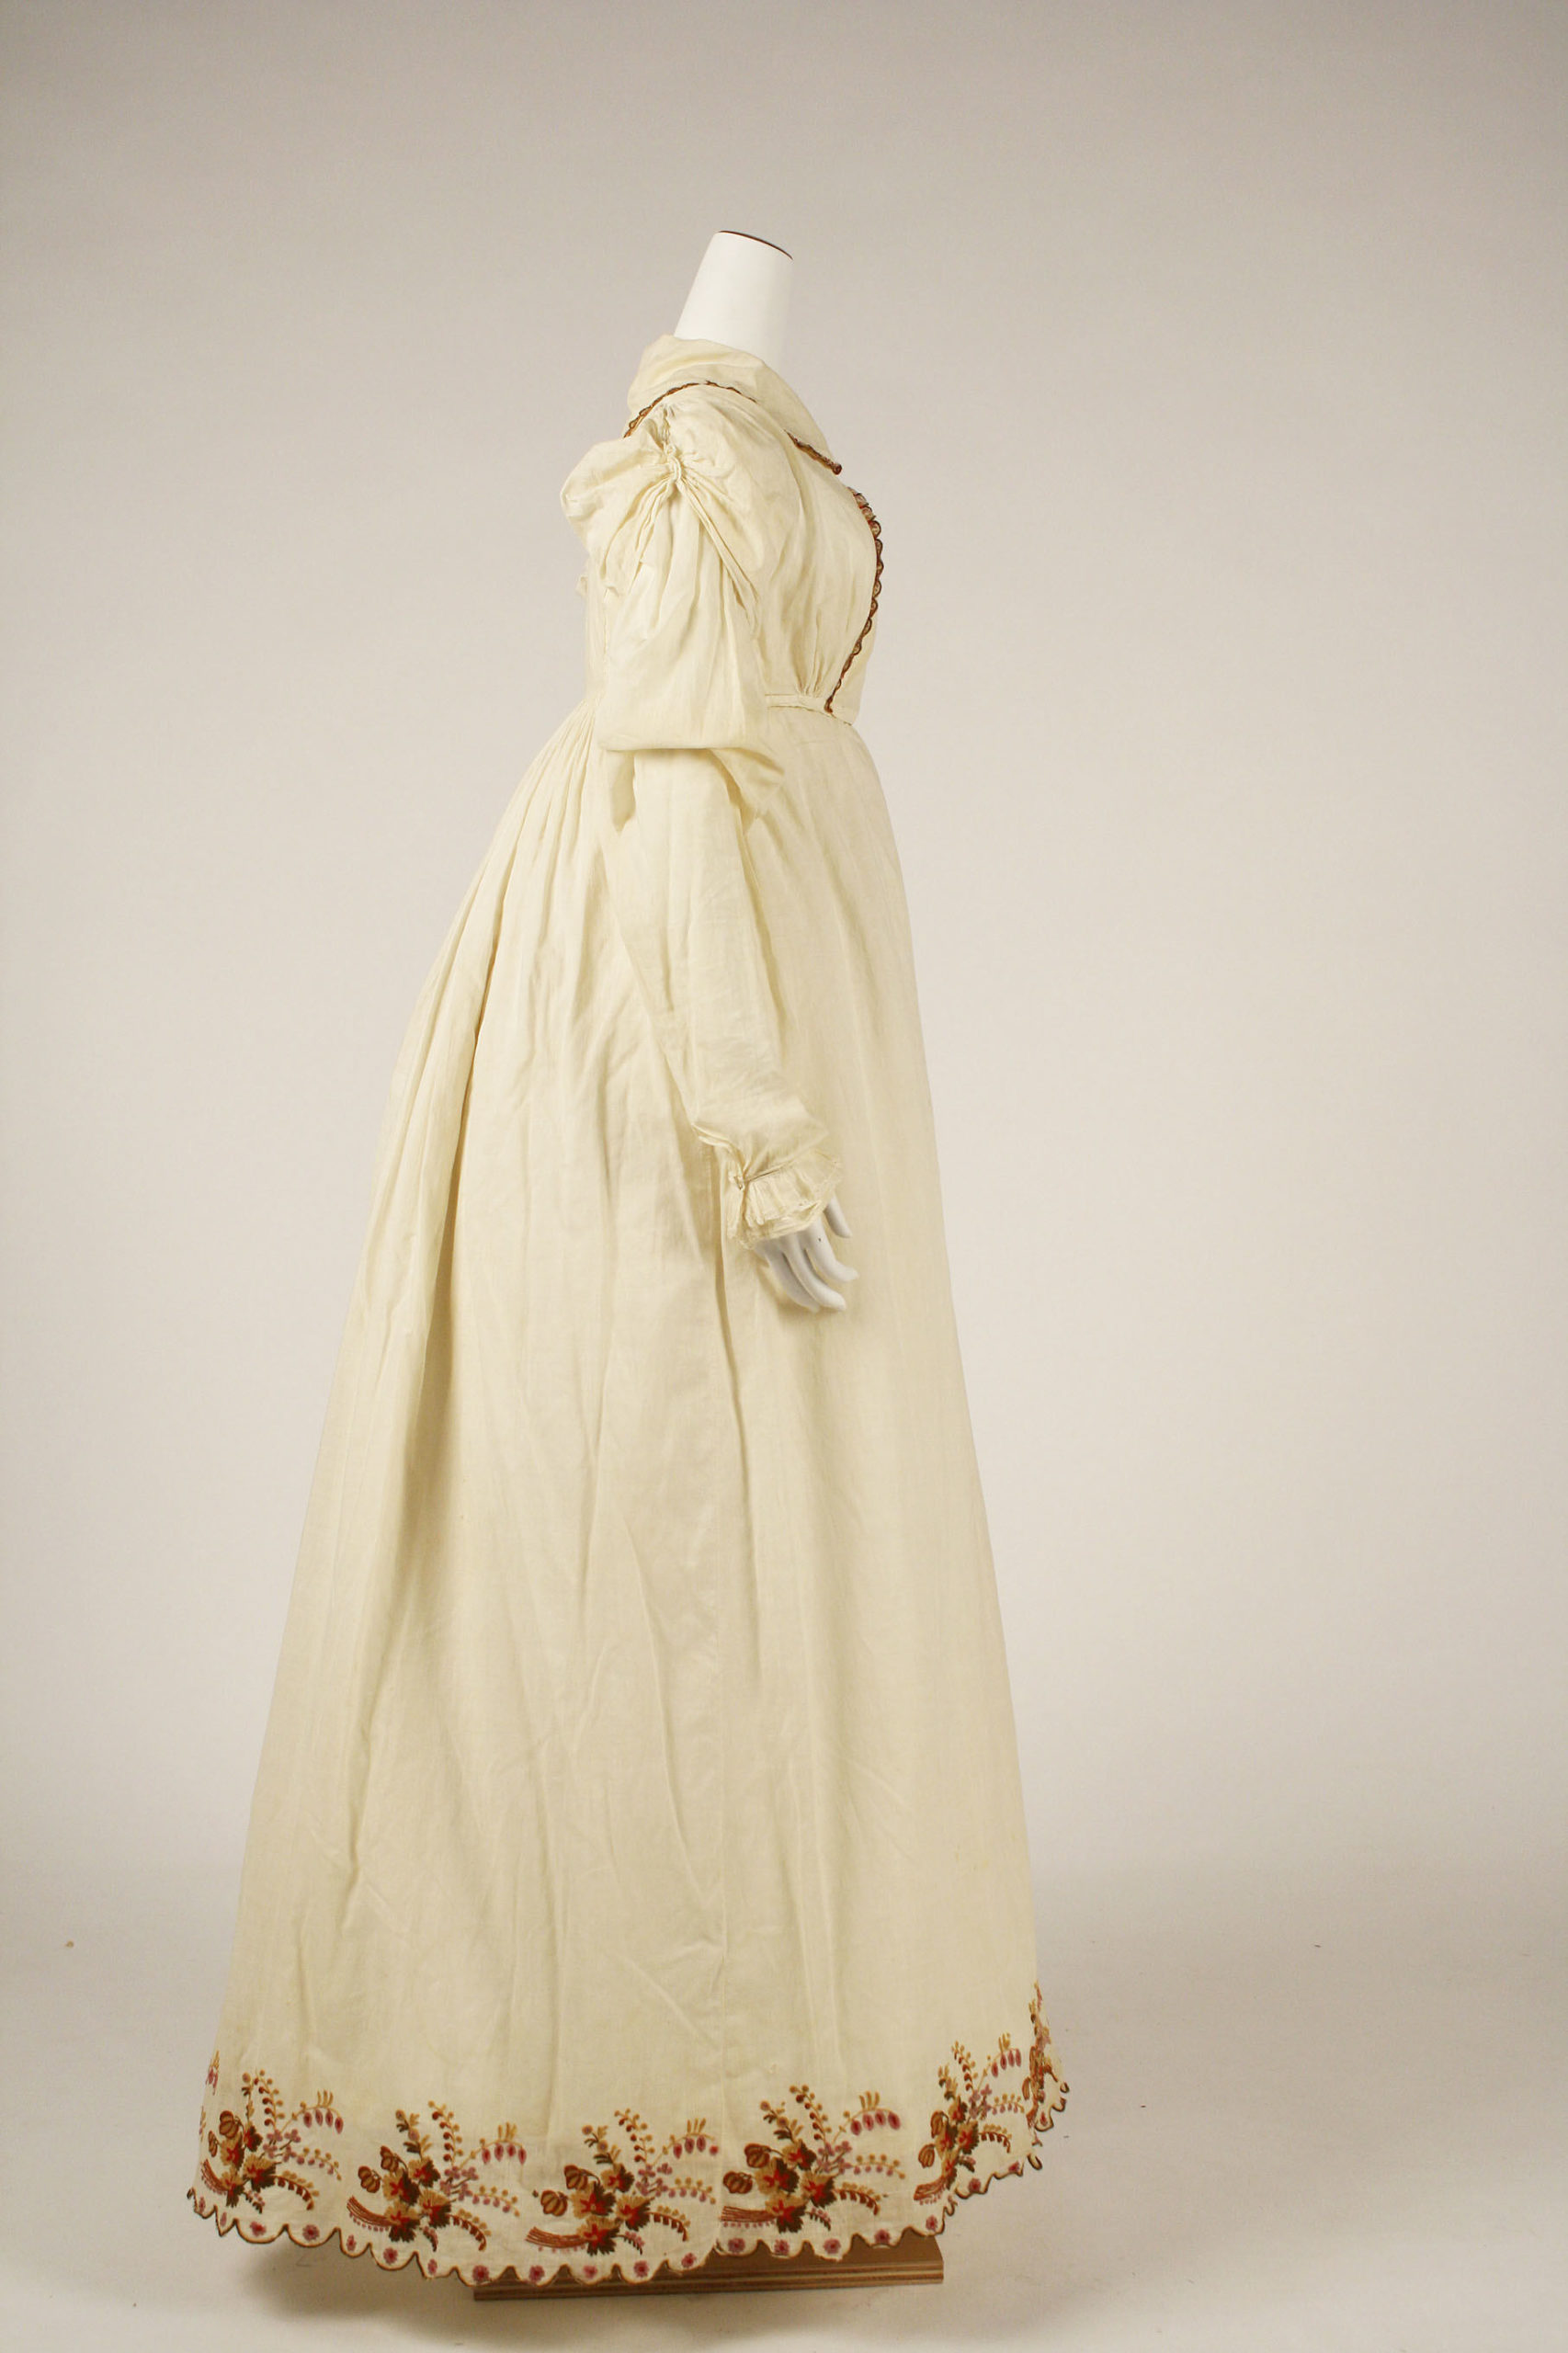 Morning dress, ca. 1806, American, cotton, wool, Gift of George V. Masselos, in memory of Grace Ziebarth, 1976, Metropolitan Museum of Art, 1976.142.2